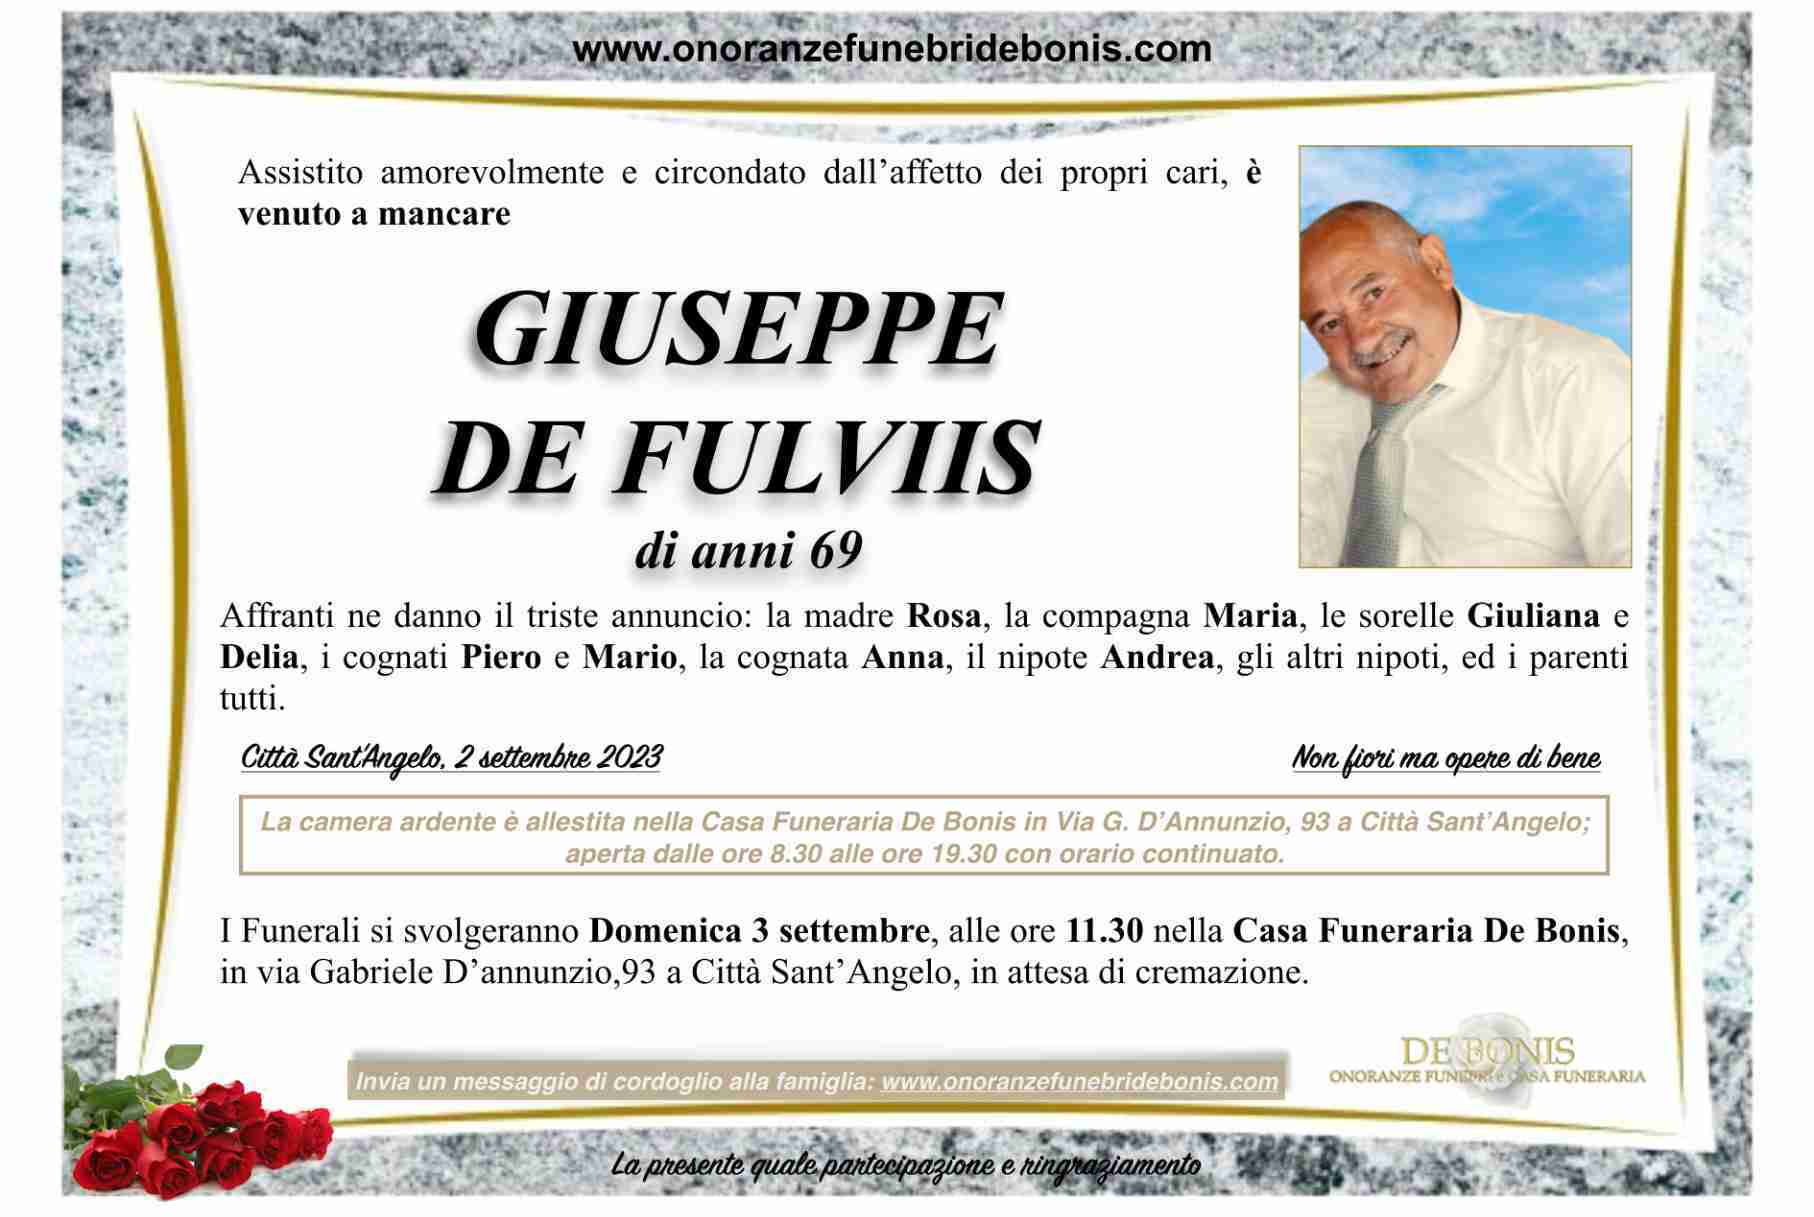 Giuseppe De Fulviis